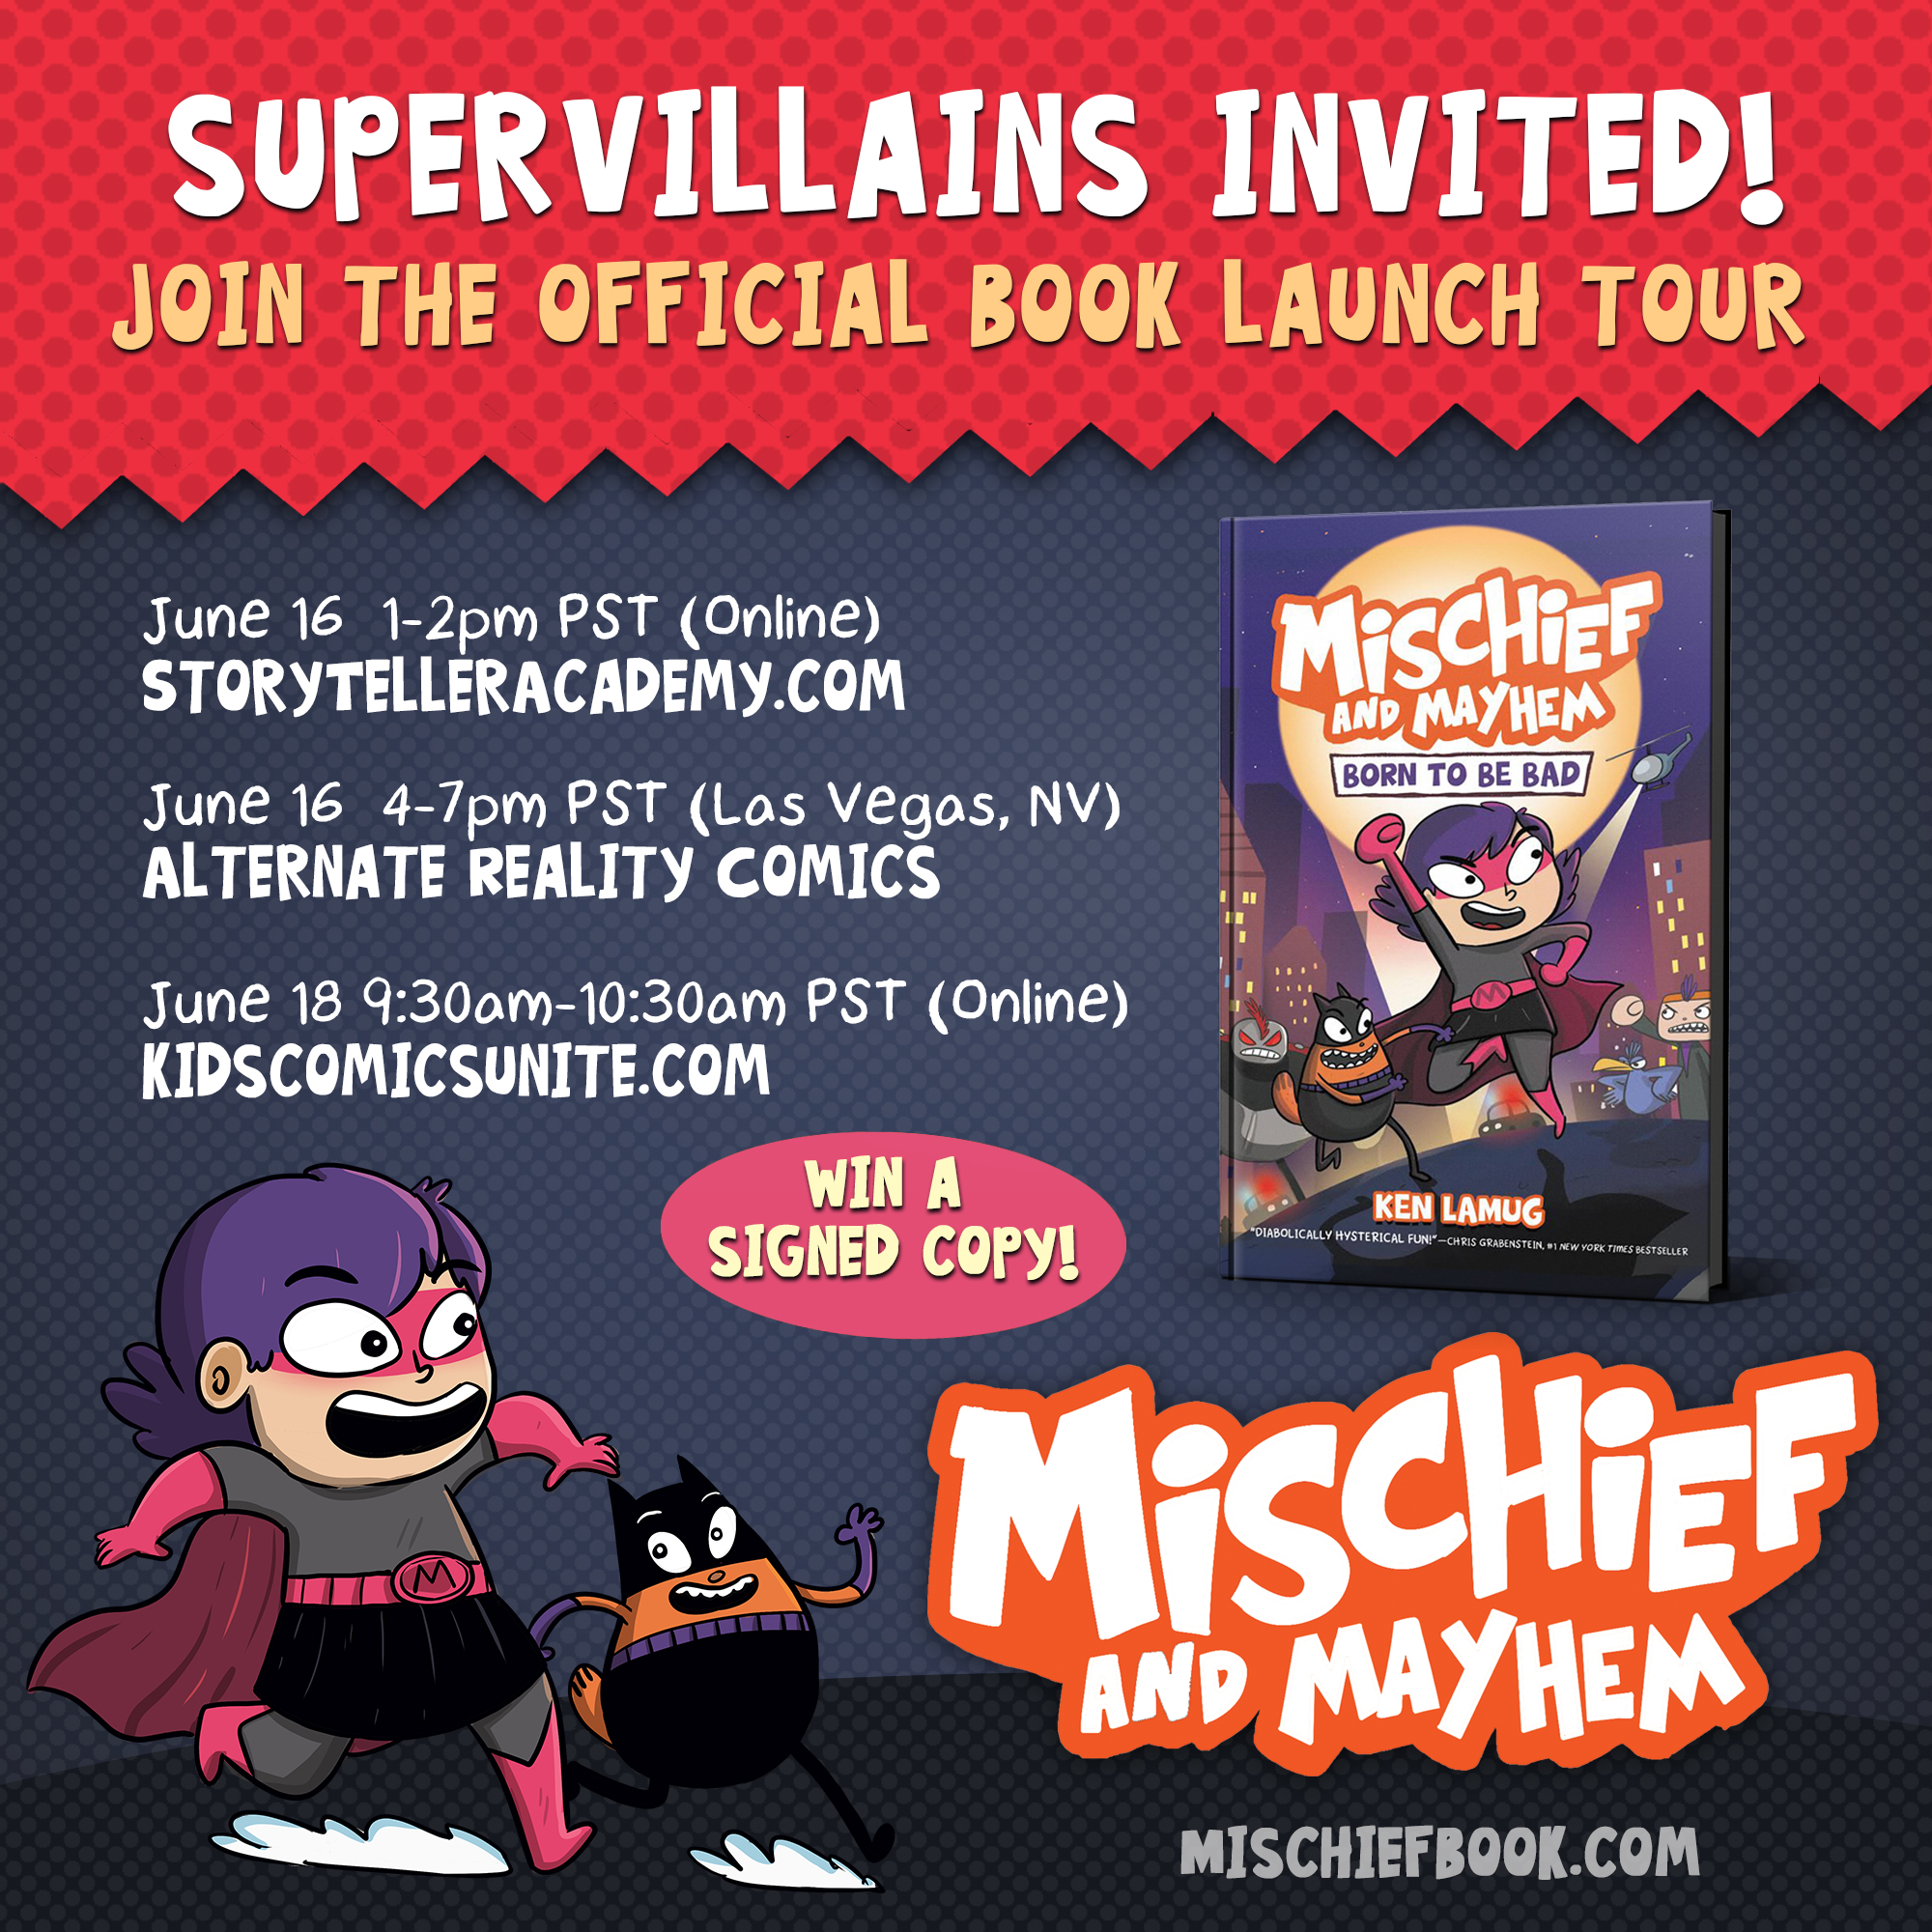 Supervillains invited! Book Tour